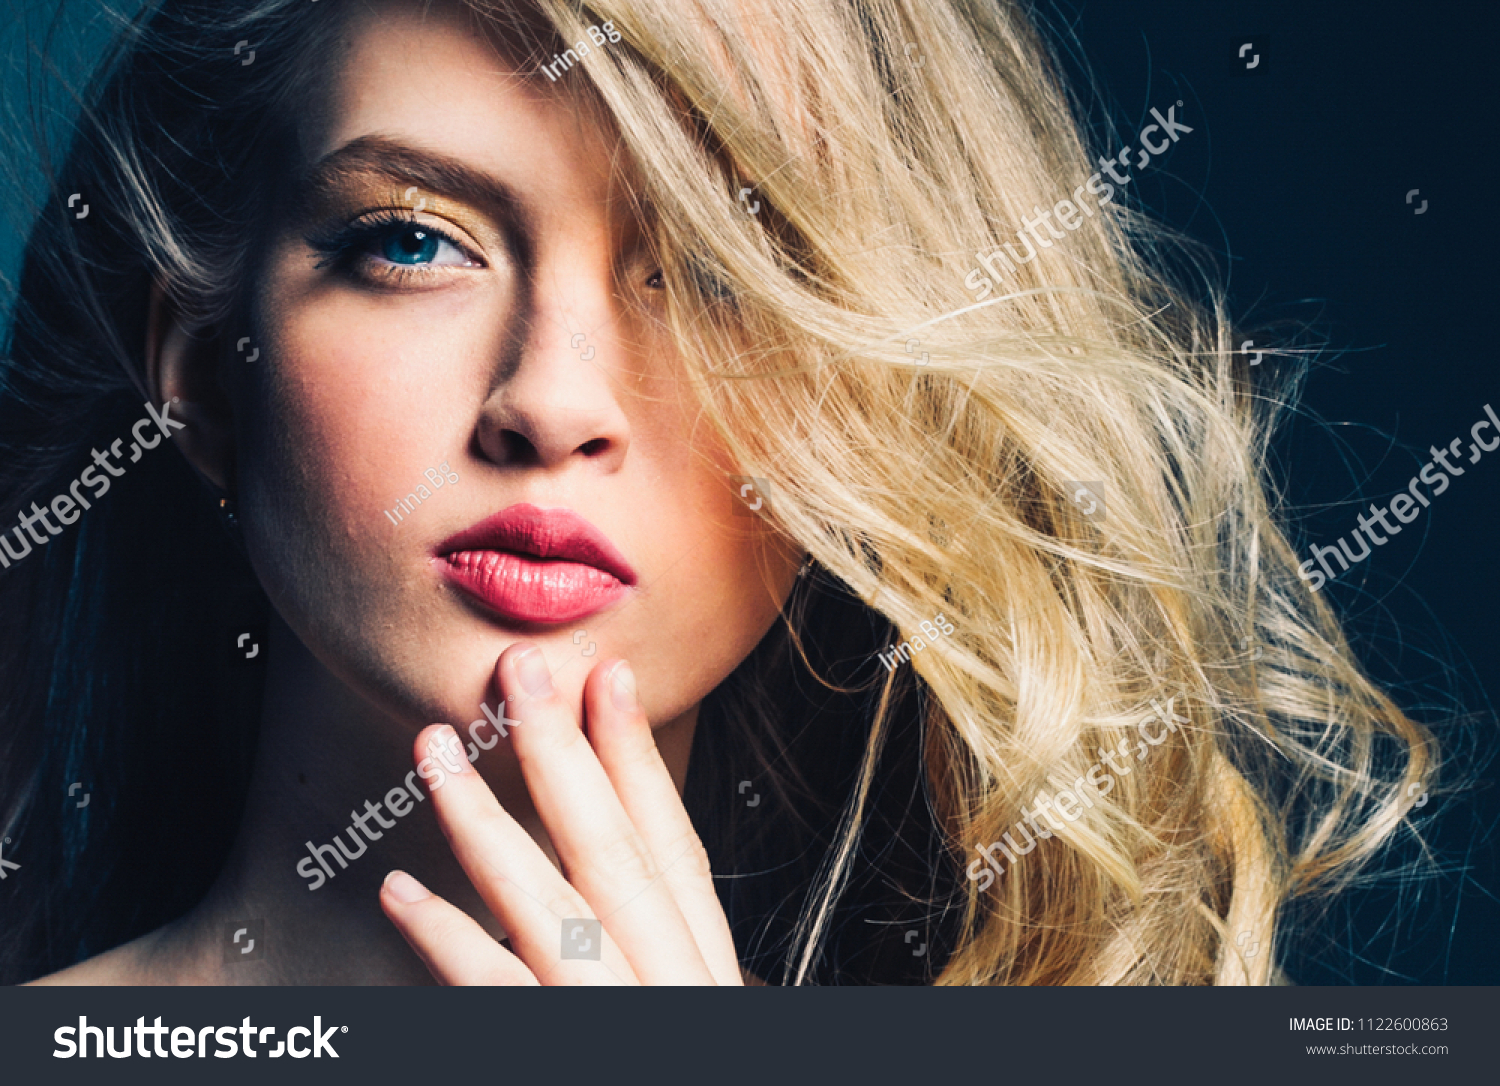 Blonde Hair Woman Hot Pink Lipstick Stock Photo Edit Now 1122600863